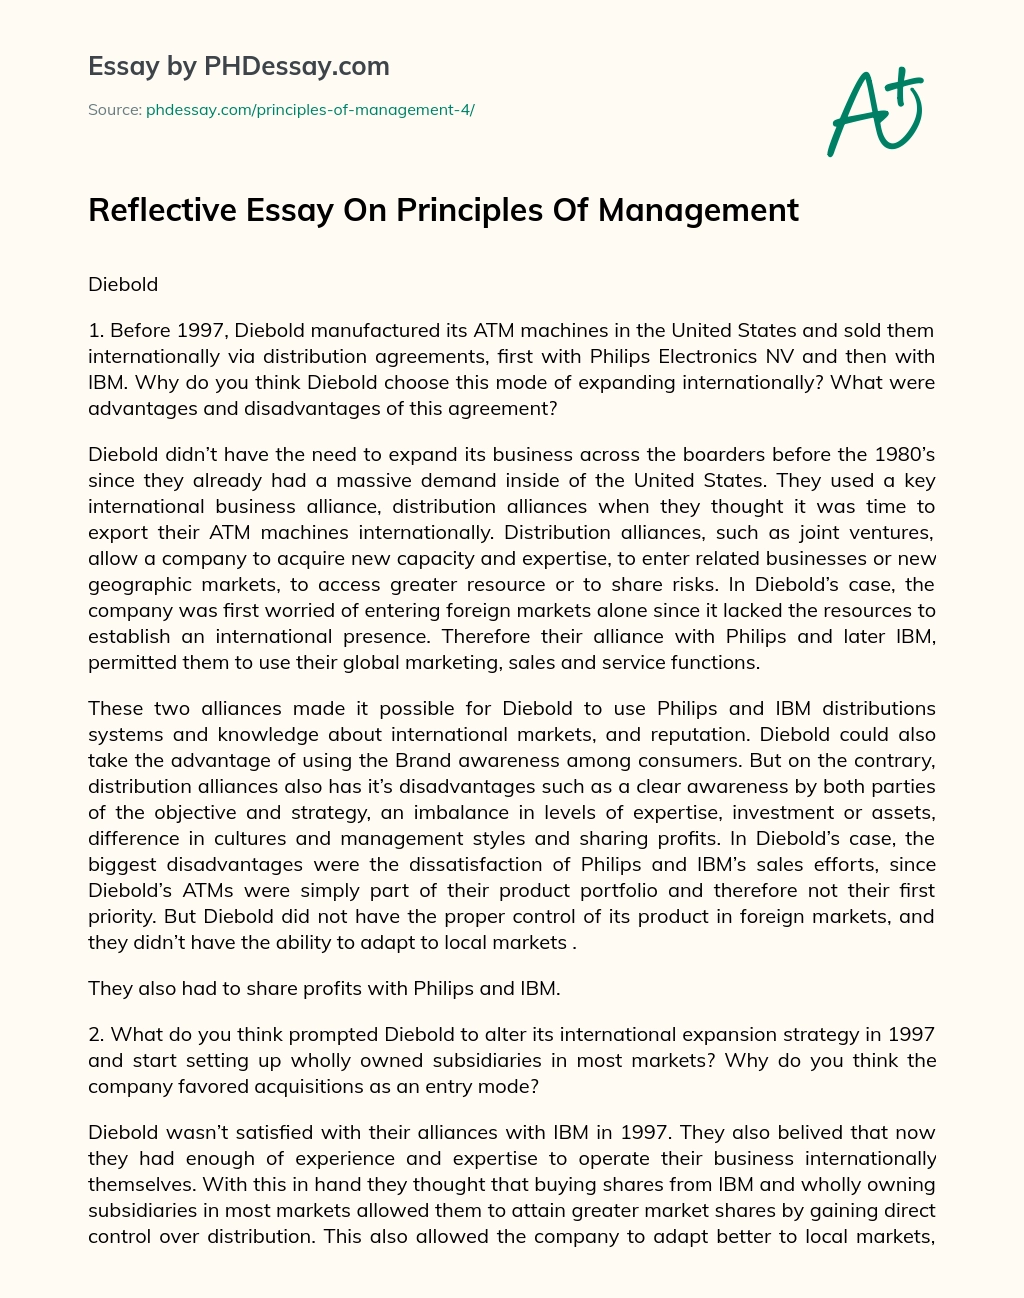 Reflective Essay On Principles Of Management essay